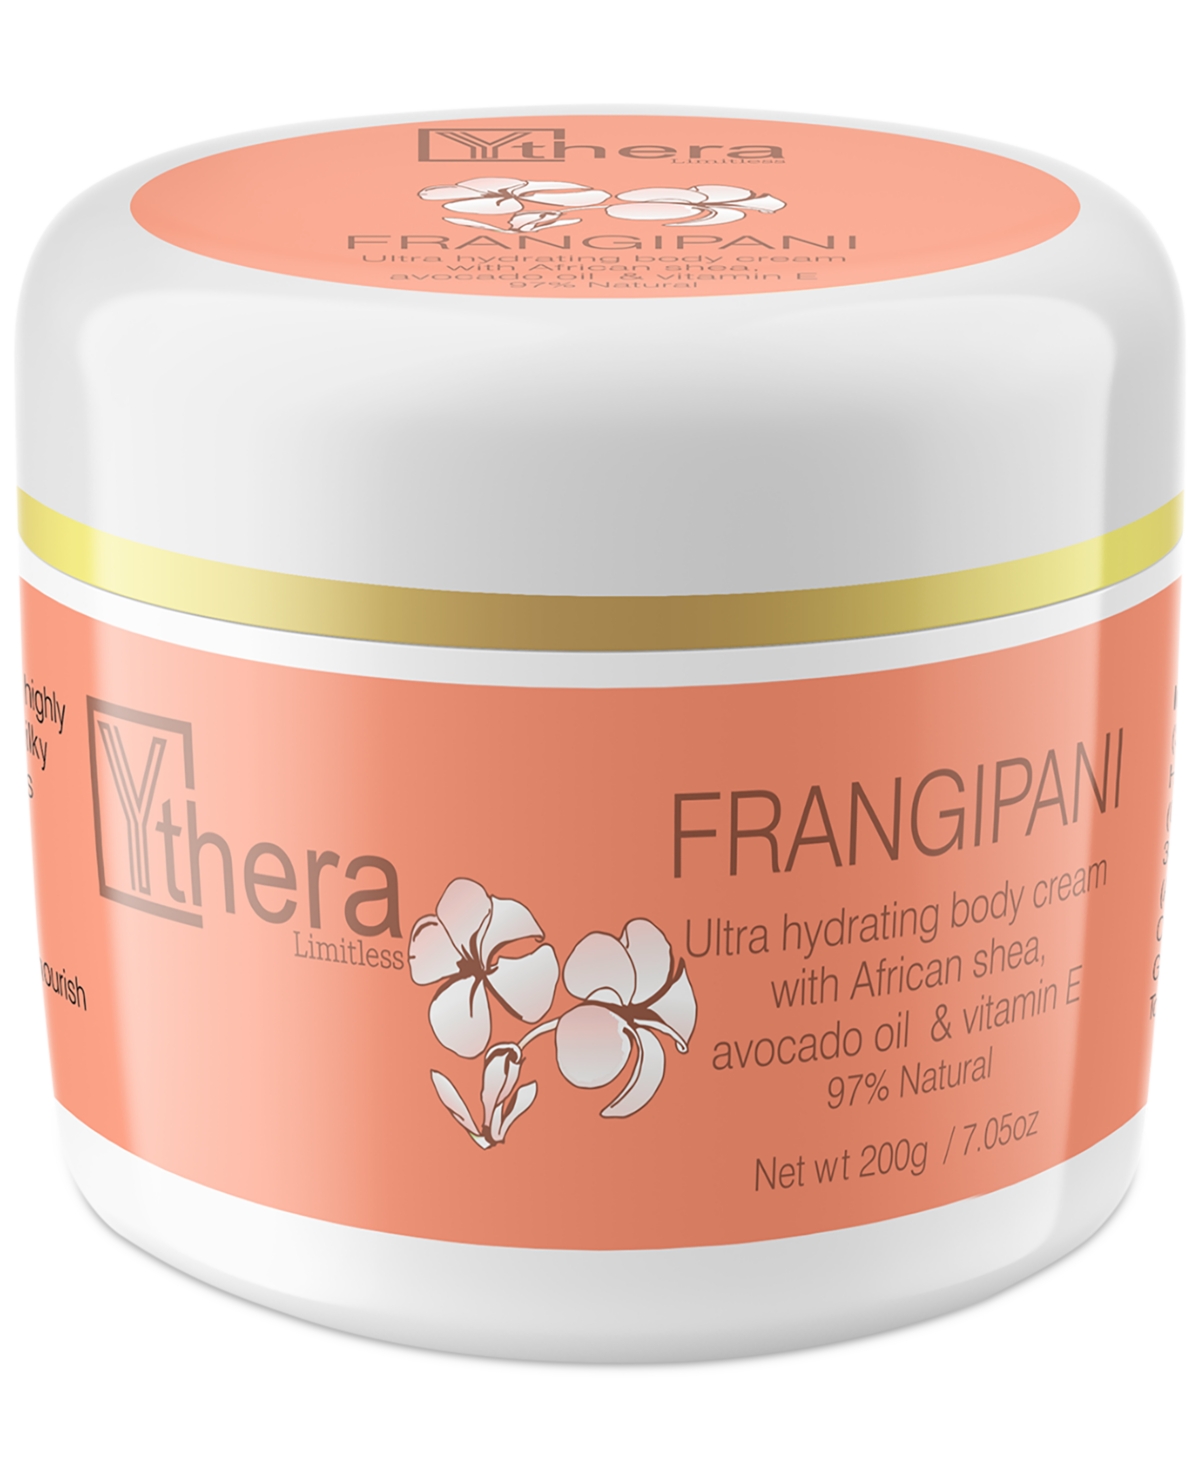 Frangipani Ultra Hydrating Body Cream, 7.05 oz.